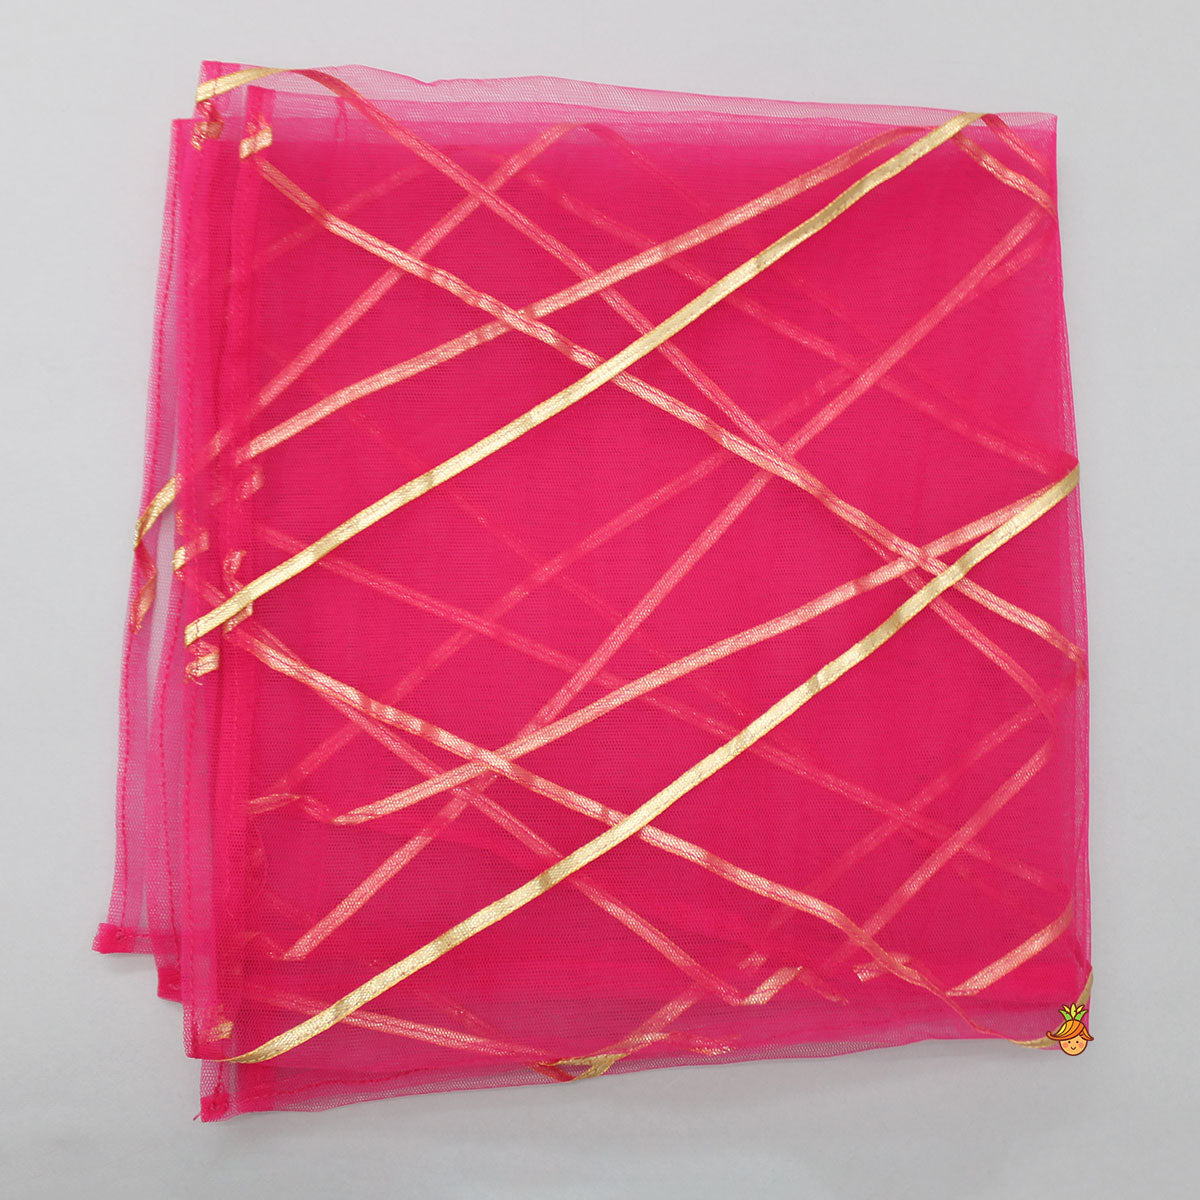 Gota Work Elegant Pink Kurti And Sharara With Net Dupatta